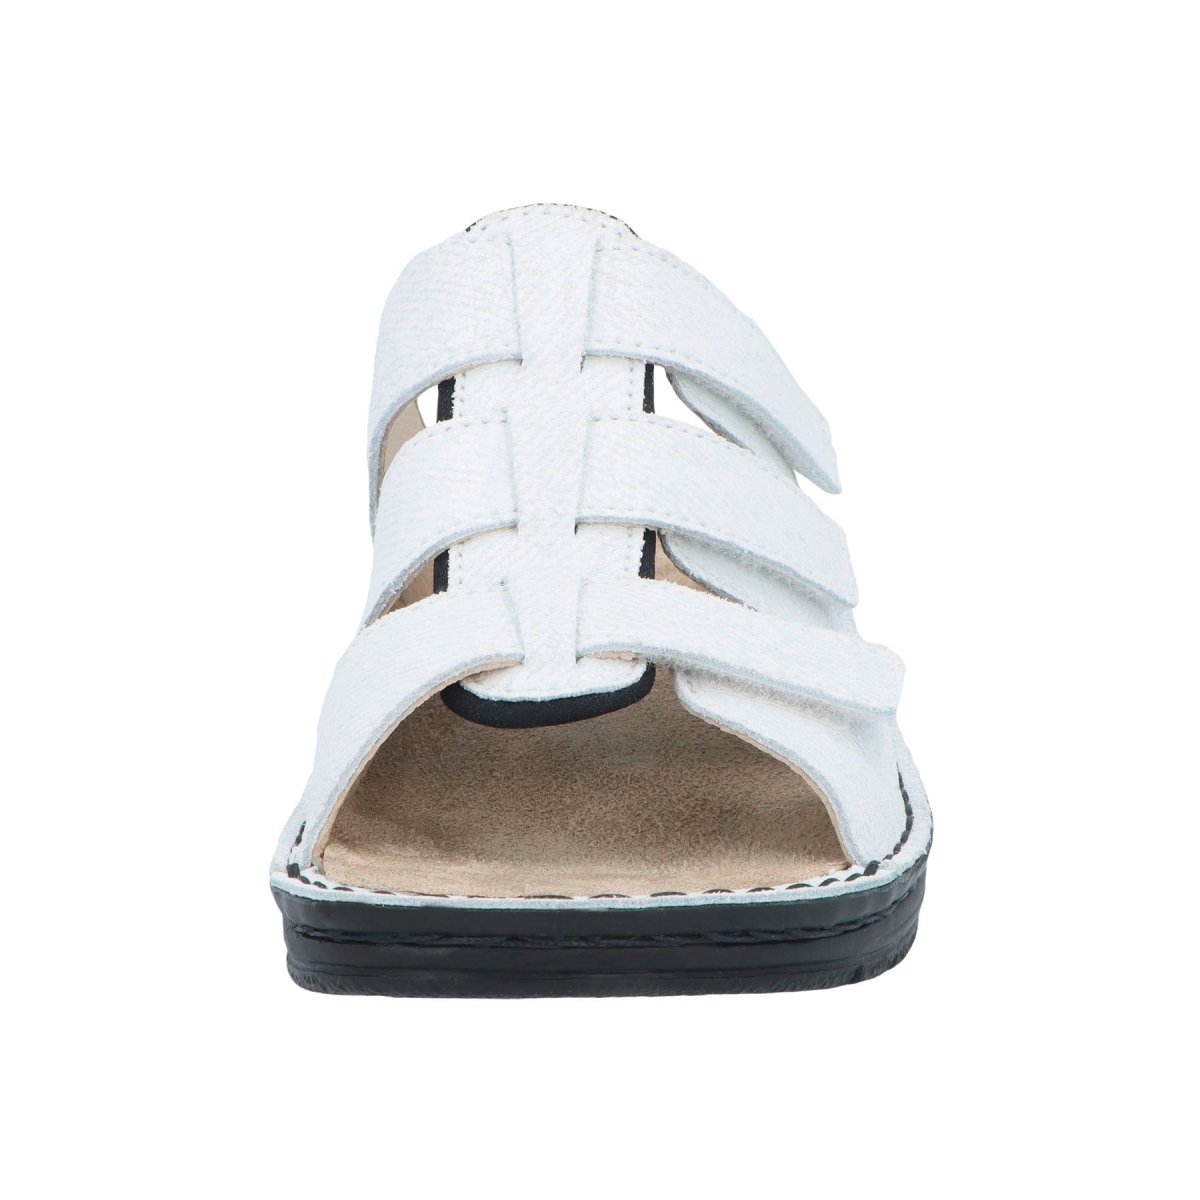 BERKEMANN SENTA WOMEN'S SANDAL IN PEARL WHITE LEATHER - TLW Shoes